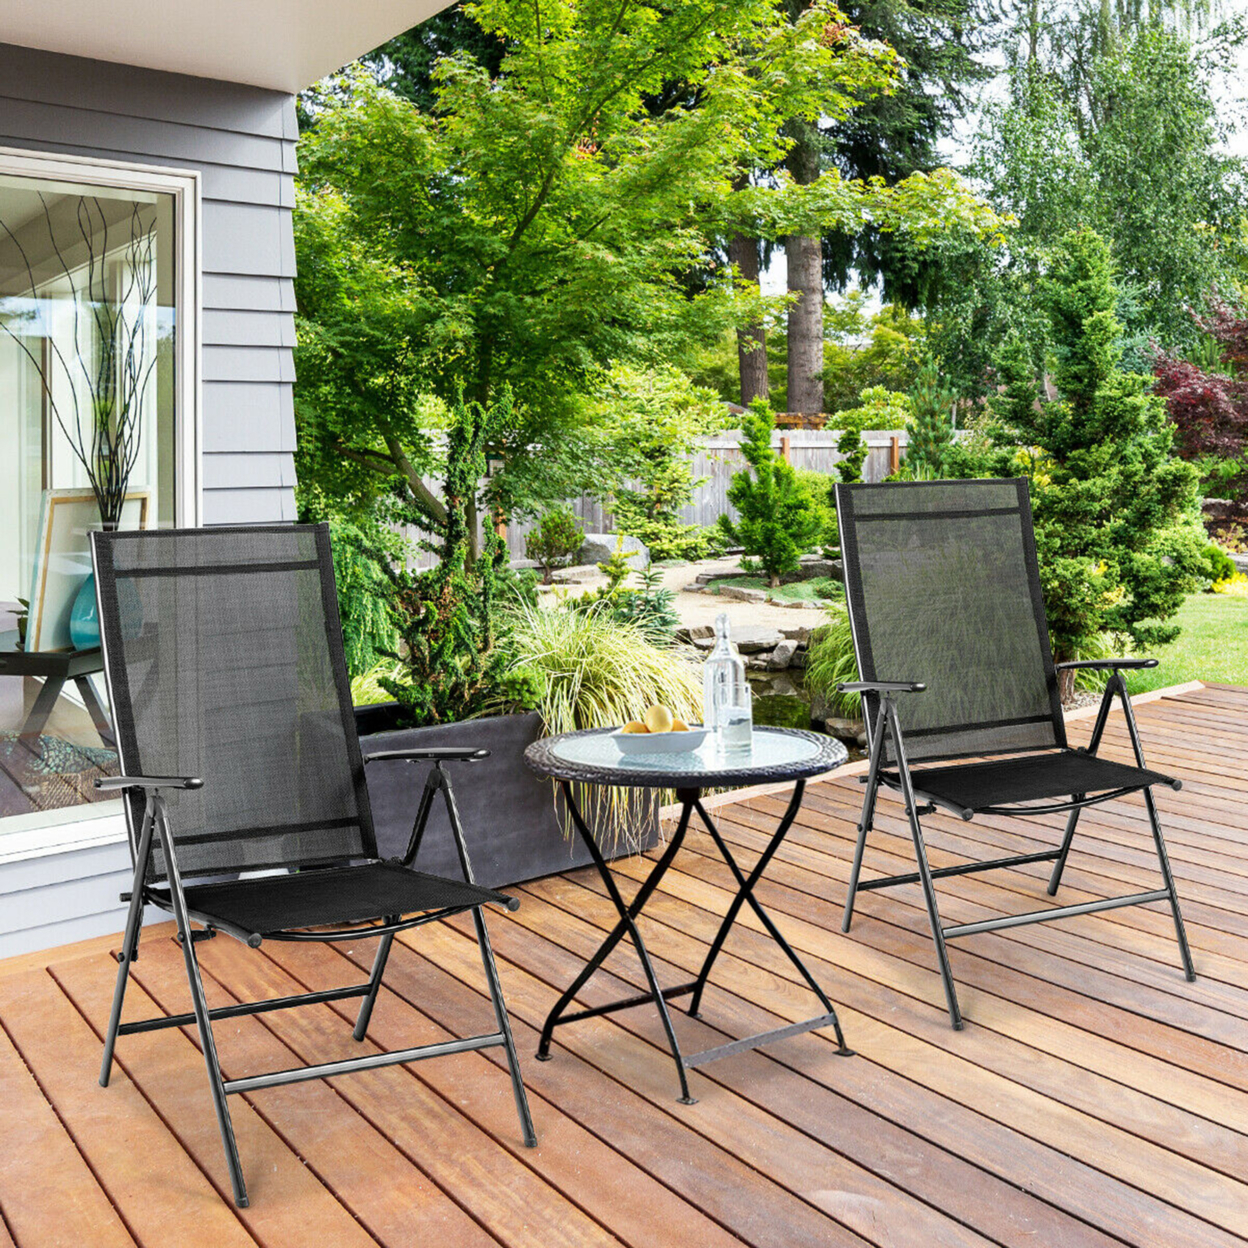 4PCS Folding Chair Patio Garden Outdoor W/ Steel Frame Adjustable Backrest